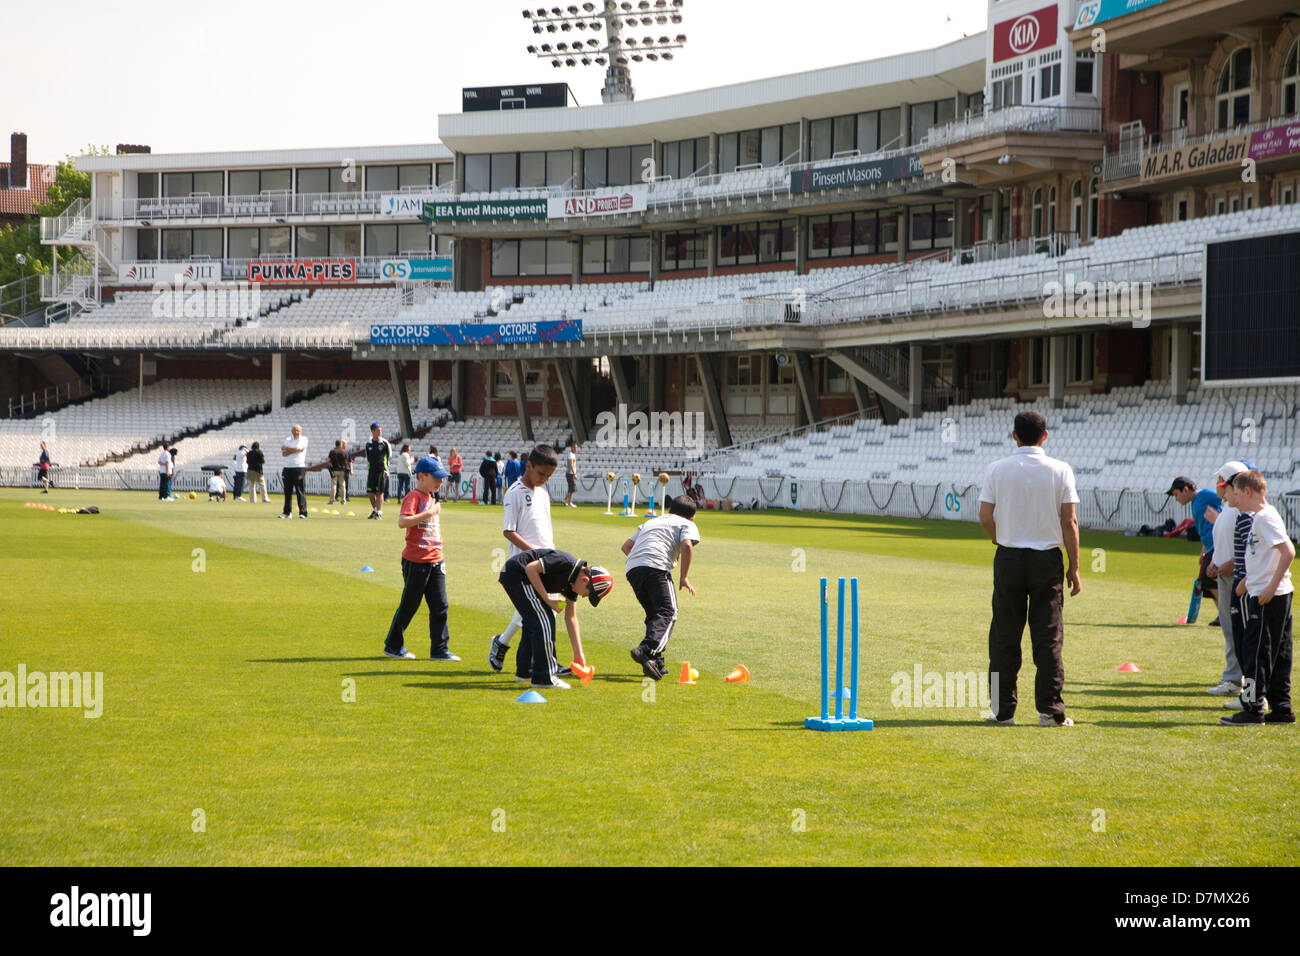 Practice game at the Kia Oval, Kennington, London, England, United Kingdom Stock Photo